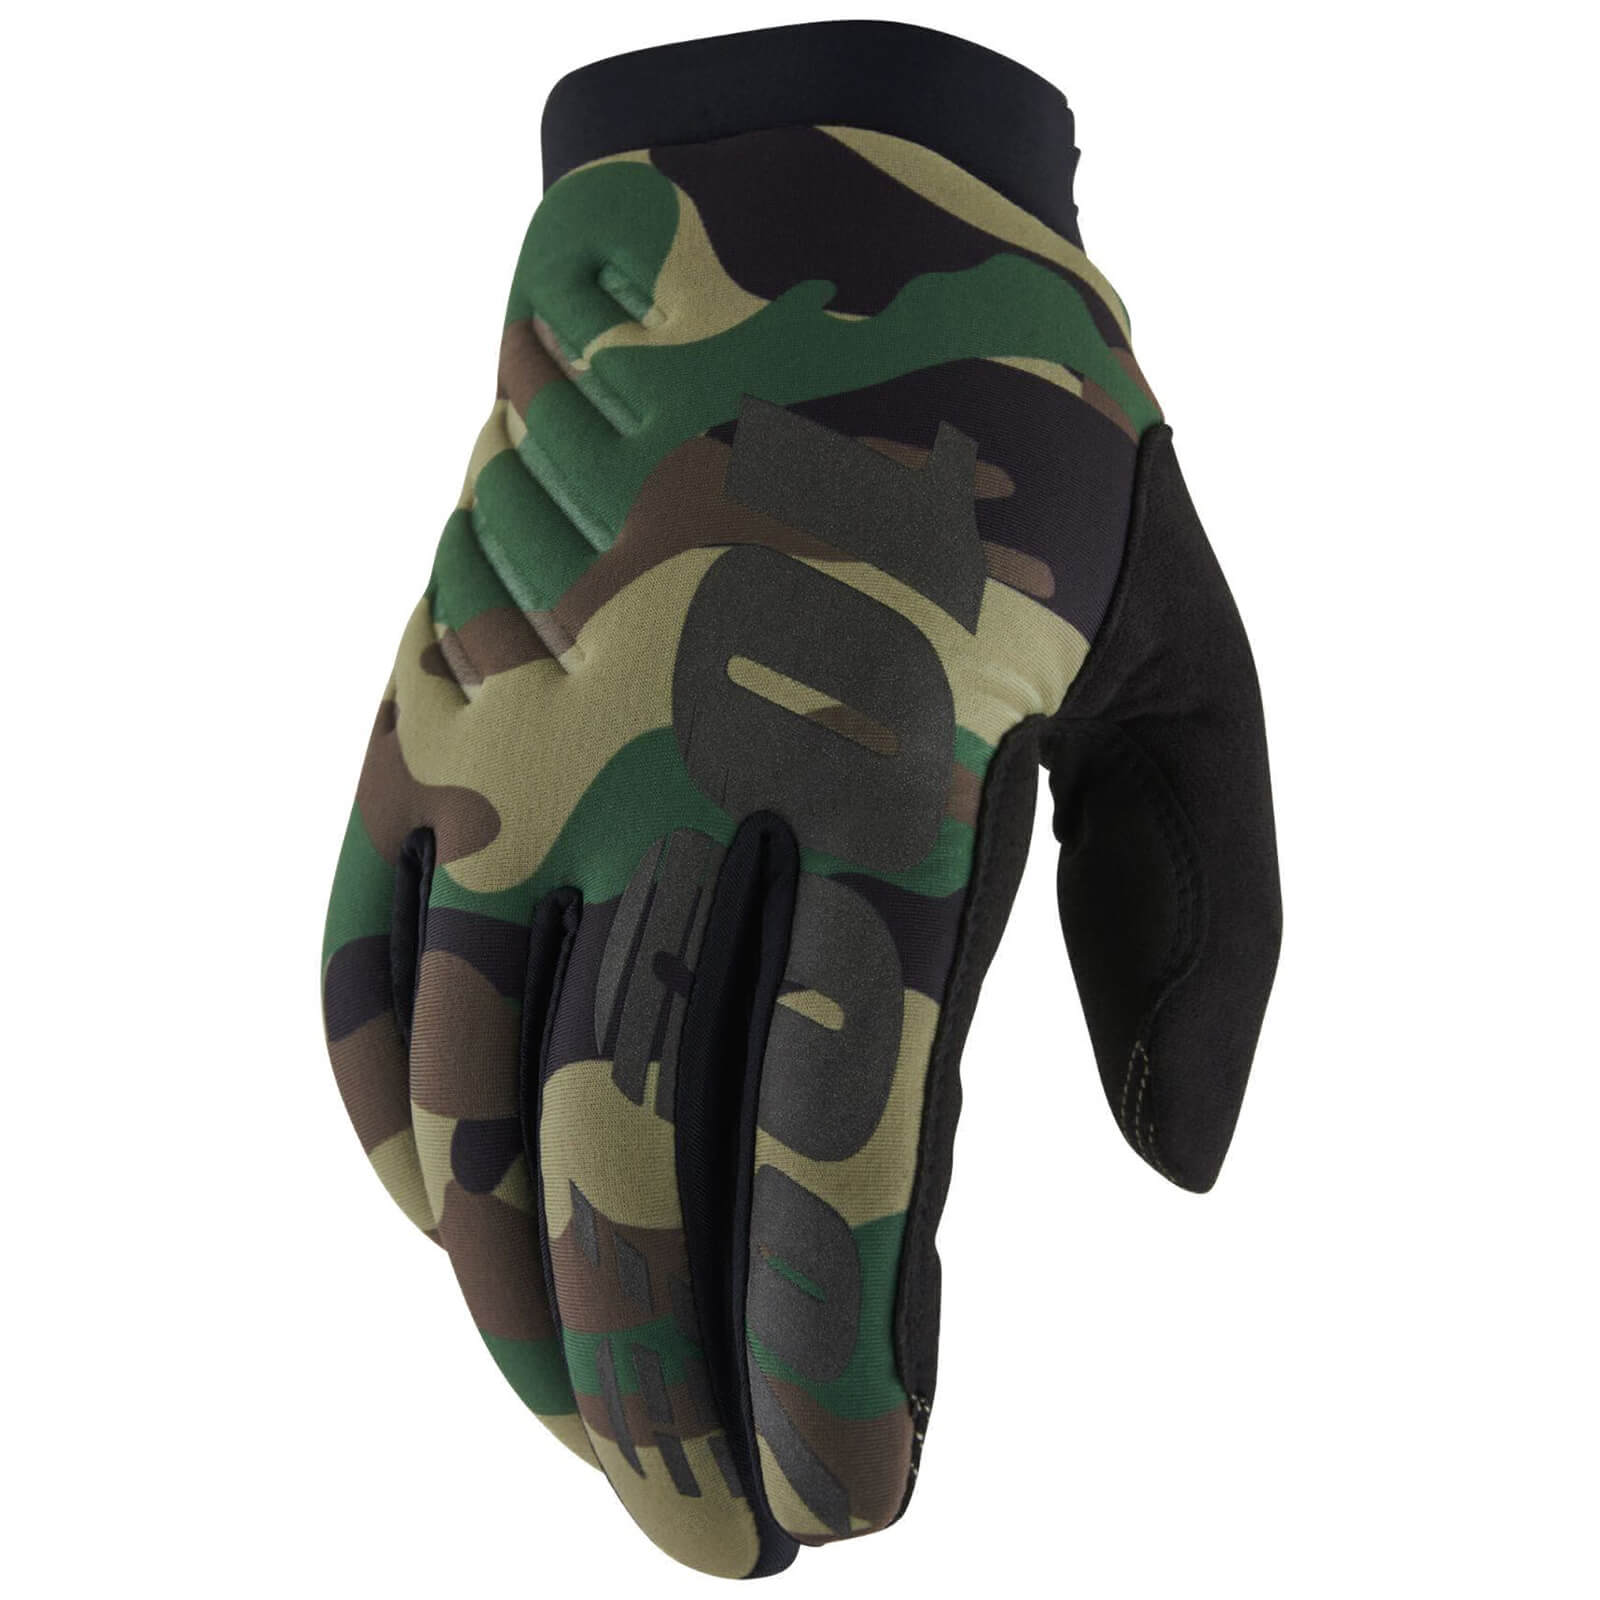 100% Brisker MTB Gloves - XL - Camo/Black